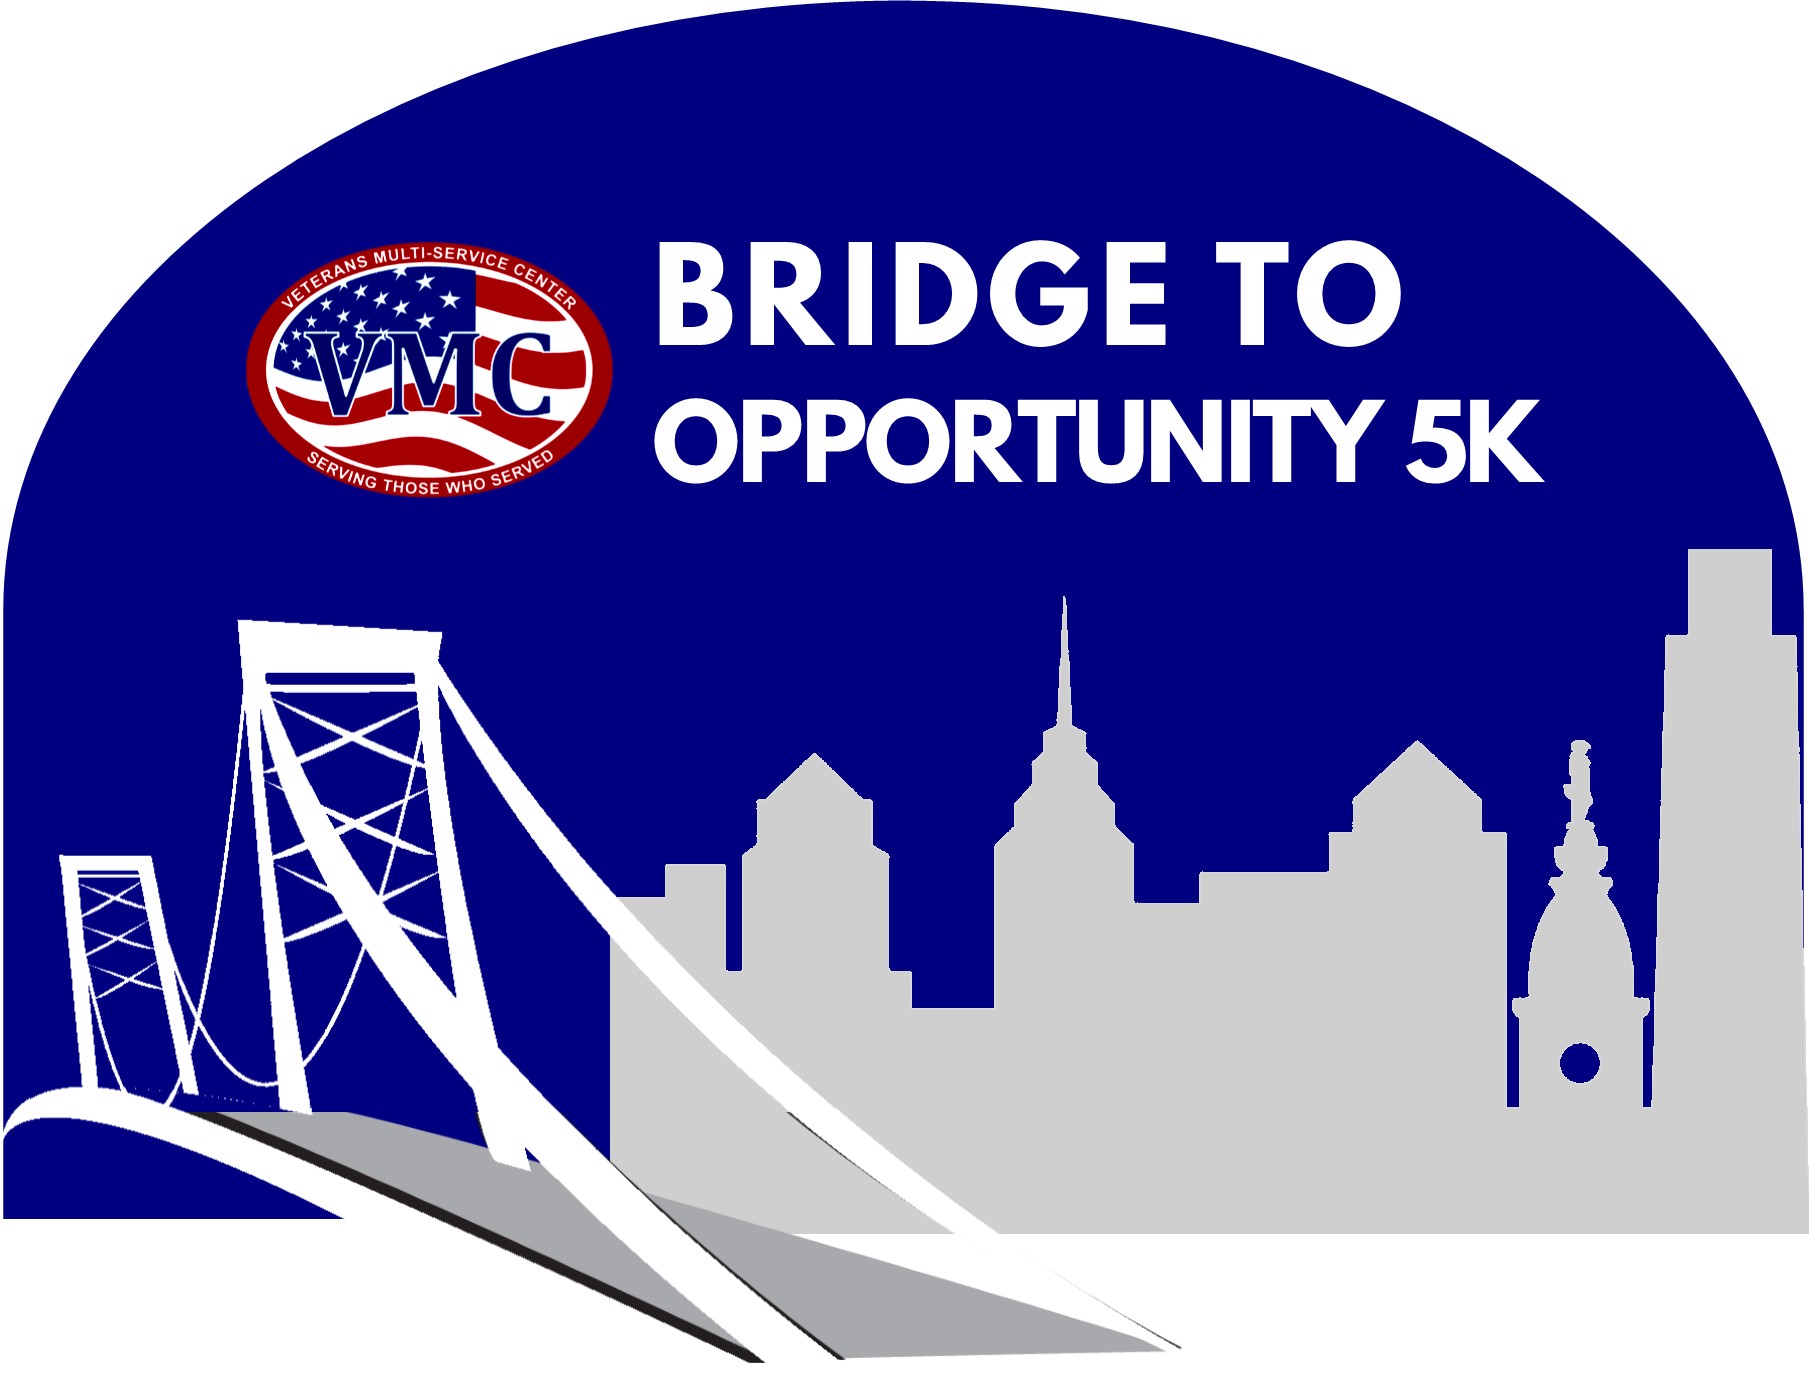 Bridge to Opportunity 5K - Veterans Multi-Service